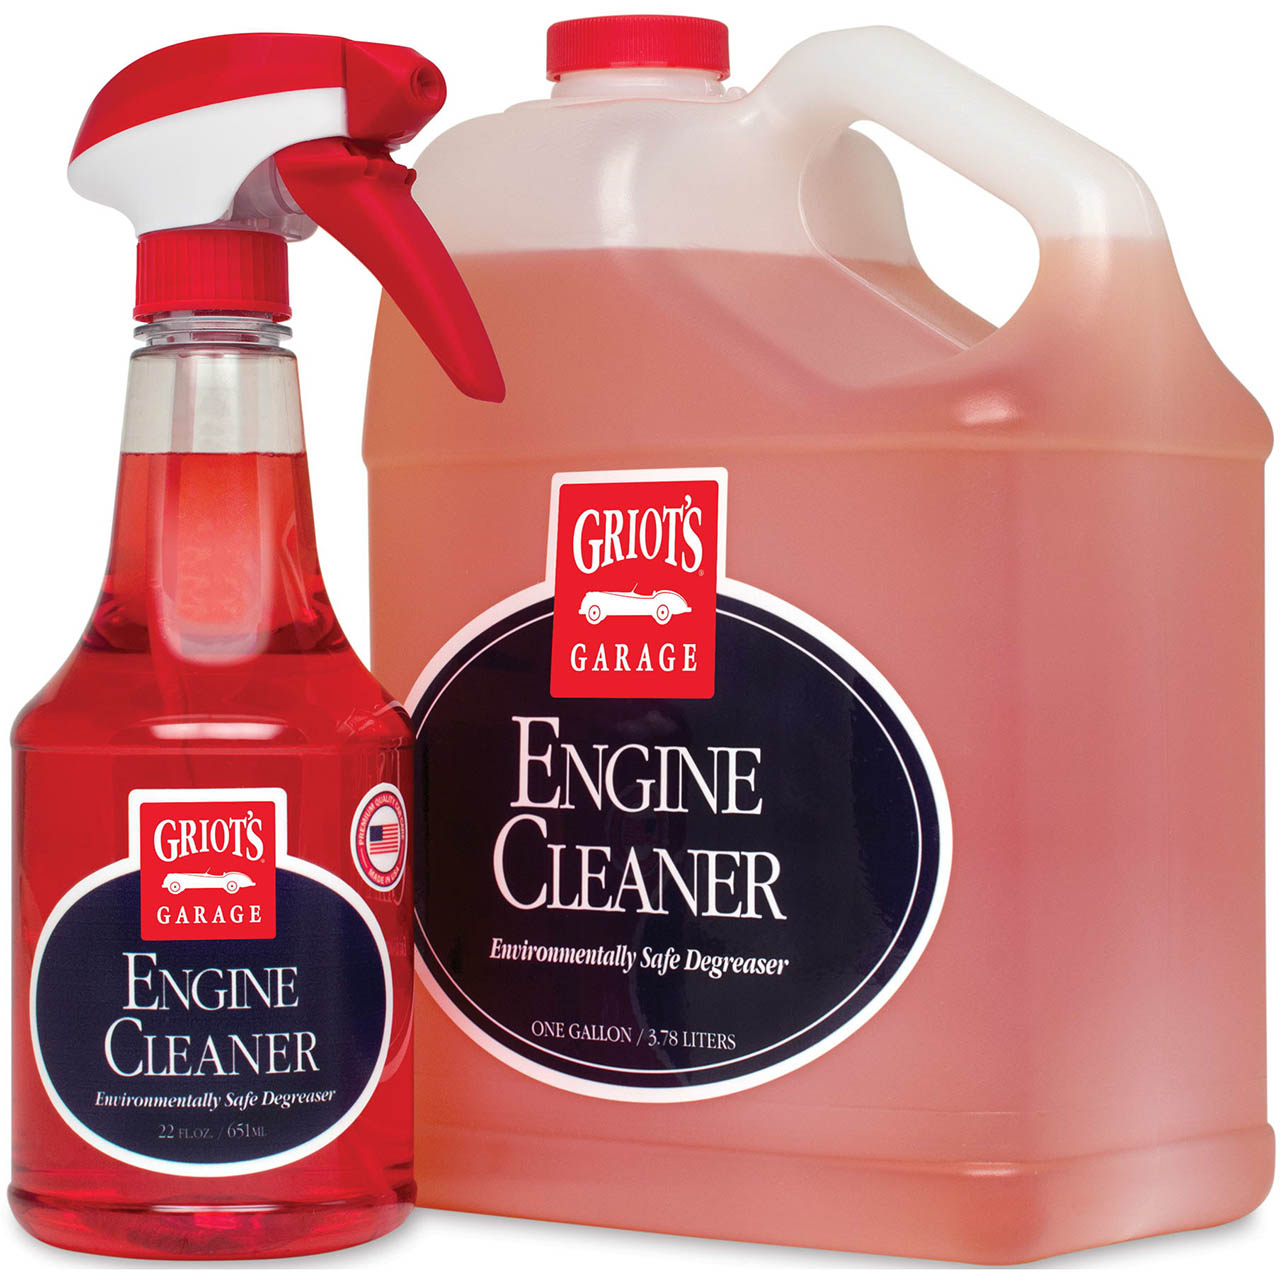 Engine Cleaner (22oz.) - Griot's Garage 10959